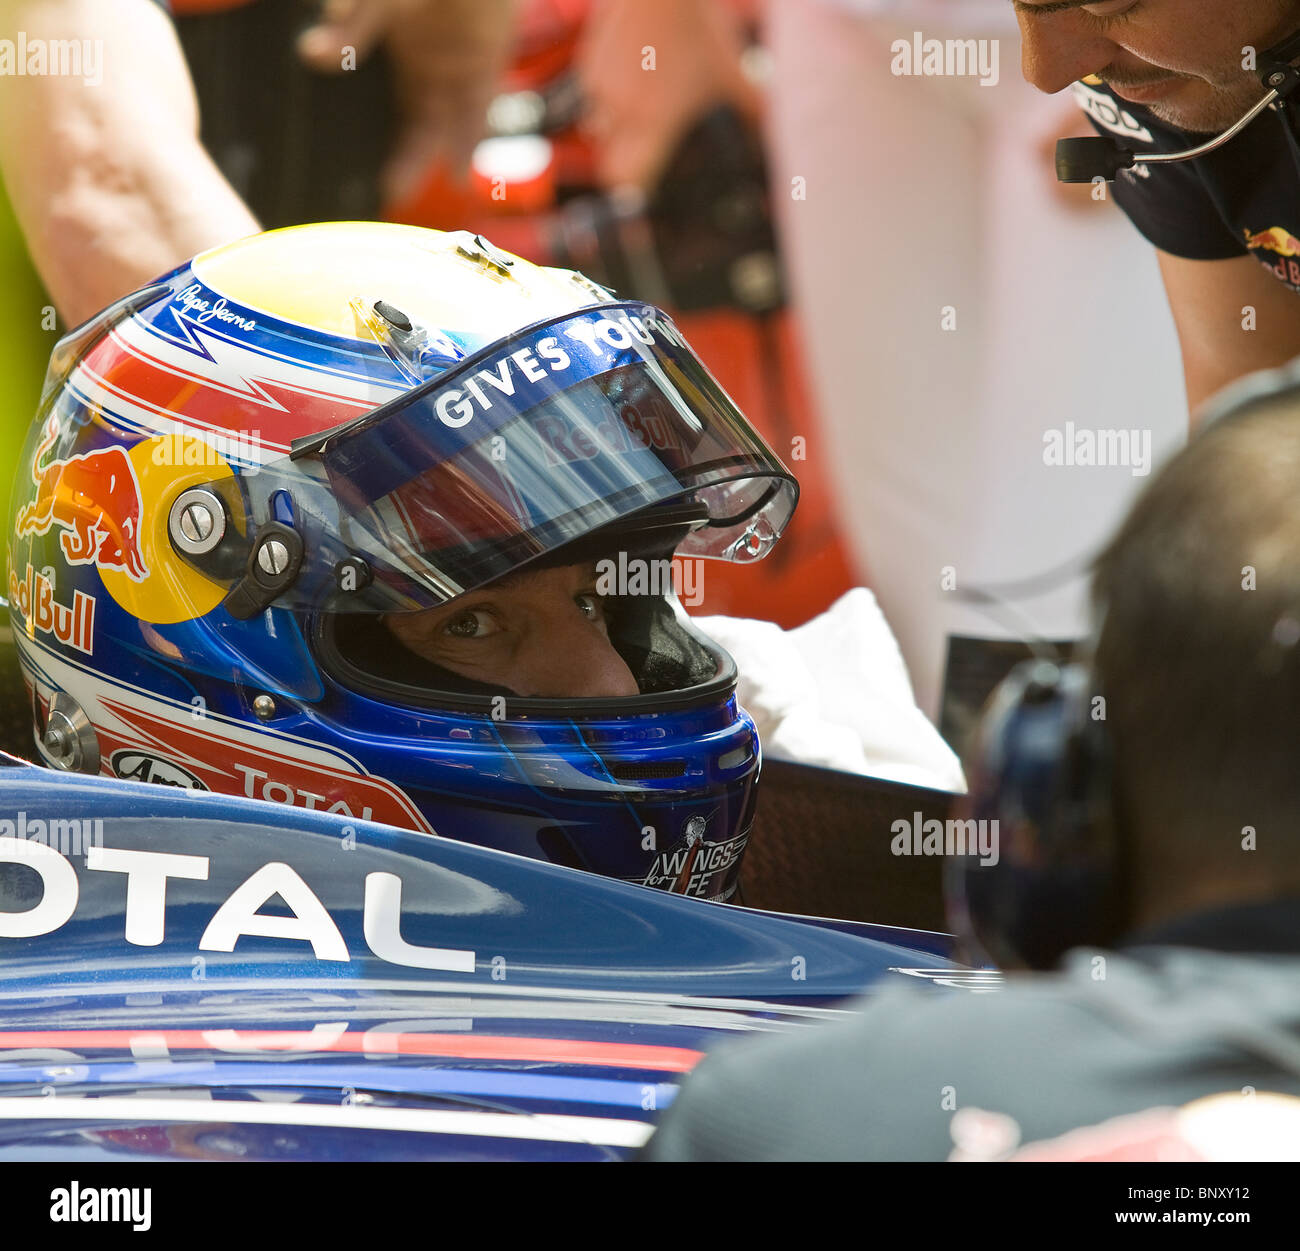 Mark Webber F1 head shot helmet in car Stock Photo